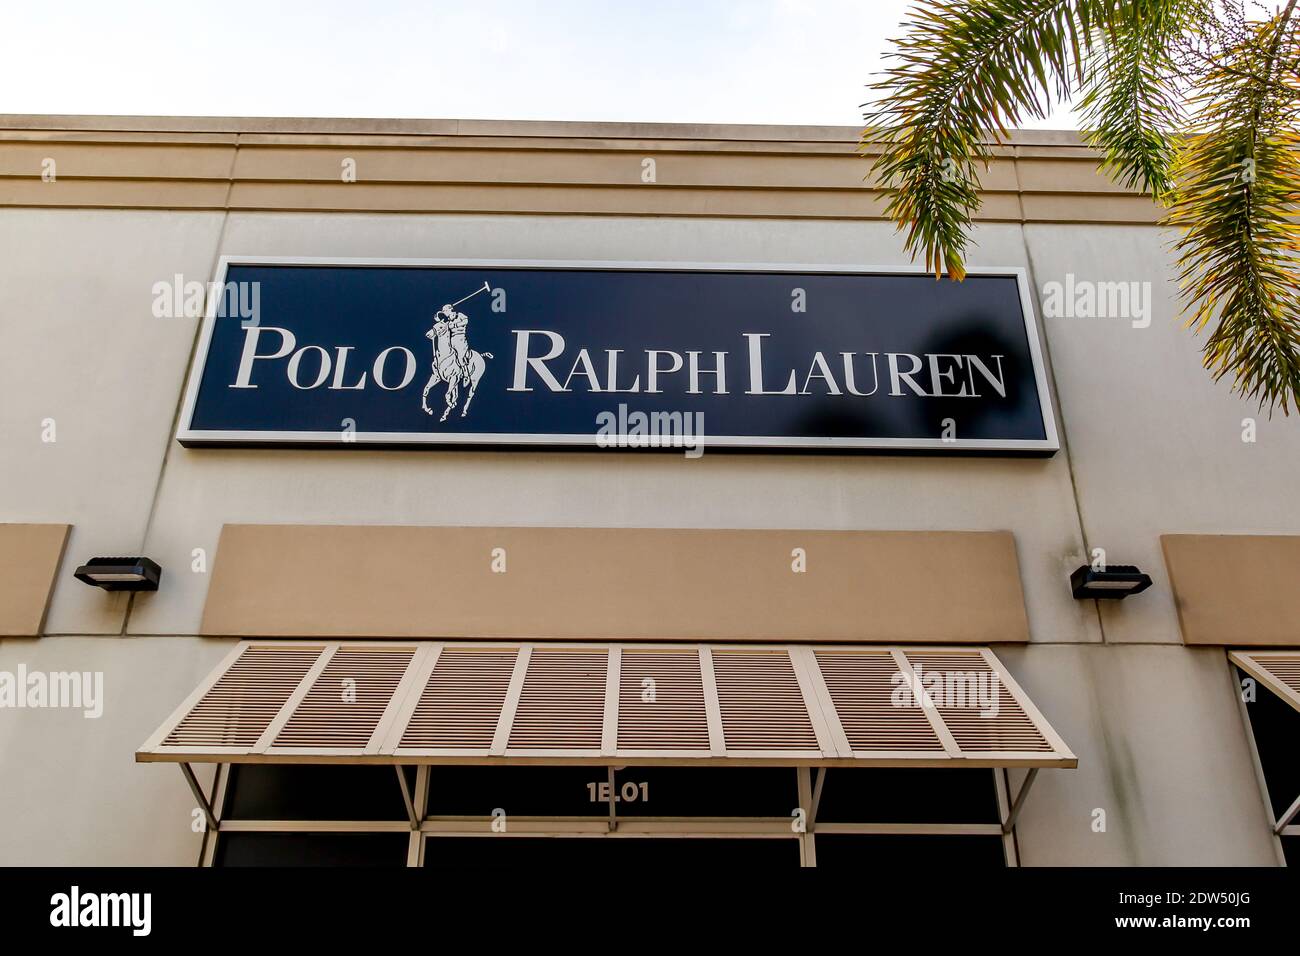 Polo Ralph Lauren store sign in Orlando, Florida, USA Stock Photo - Alamy